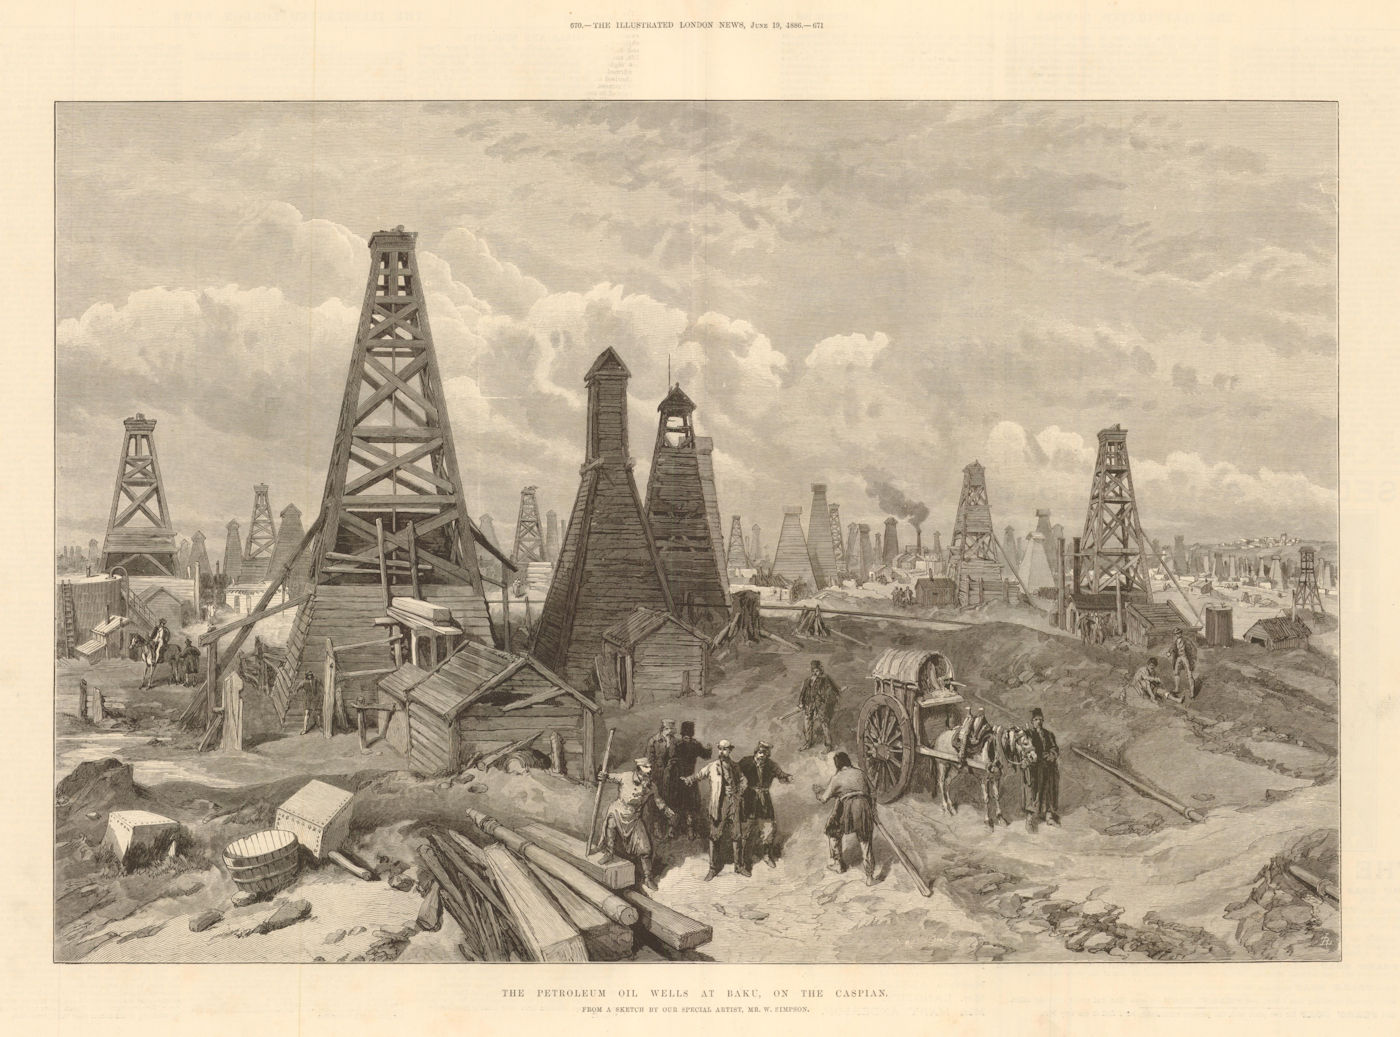 The petroleum oil wells at Baku, on the Caspian. Azerbaijan 1886 ILN full page